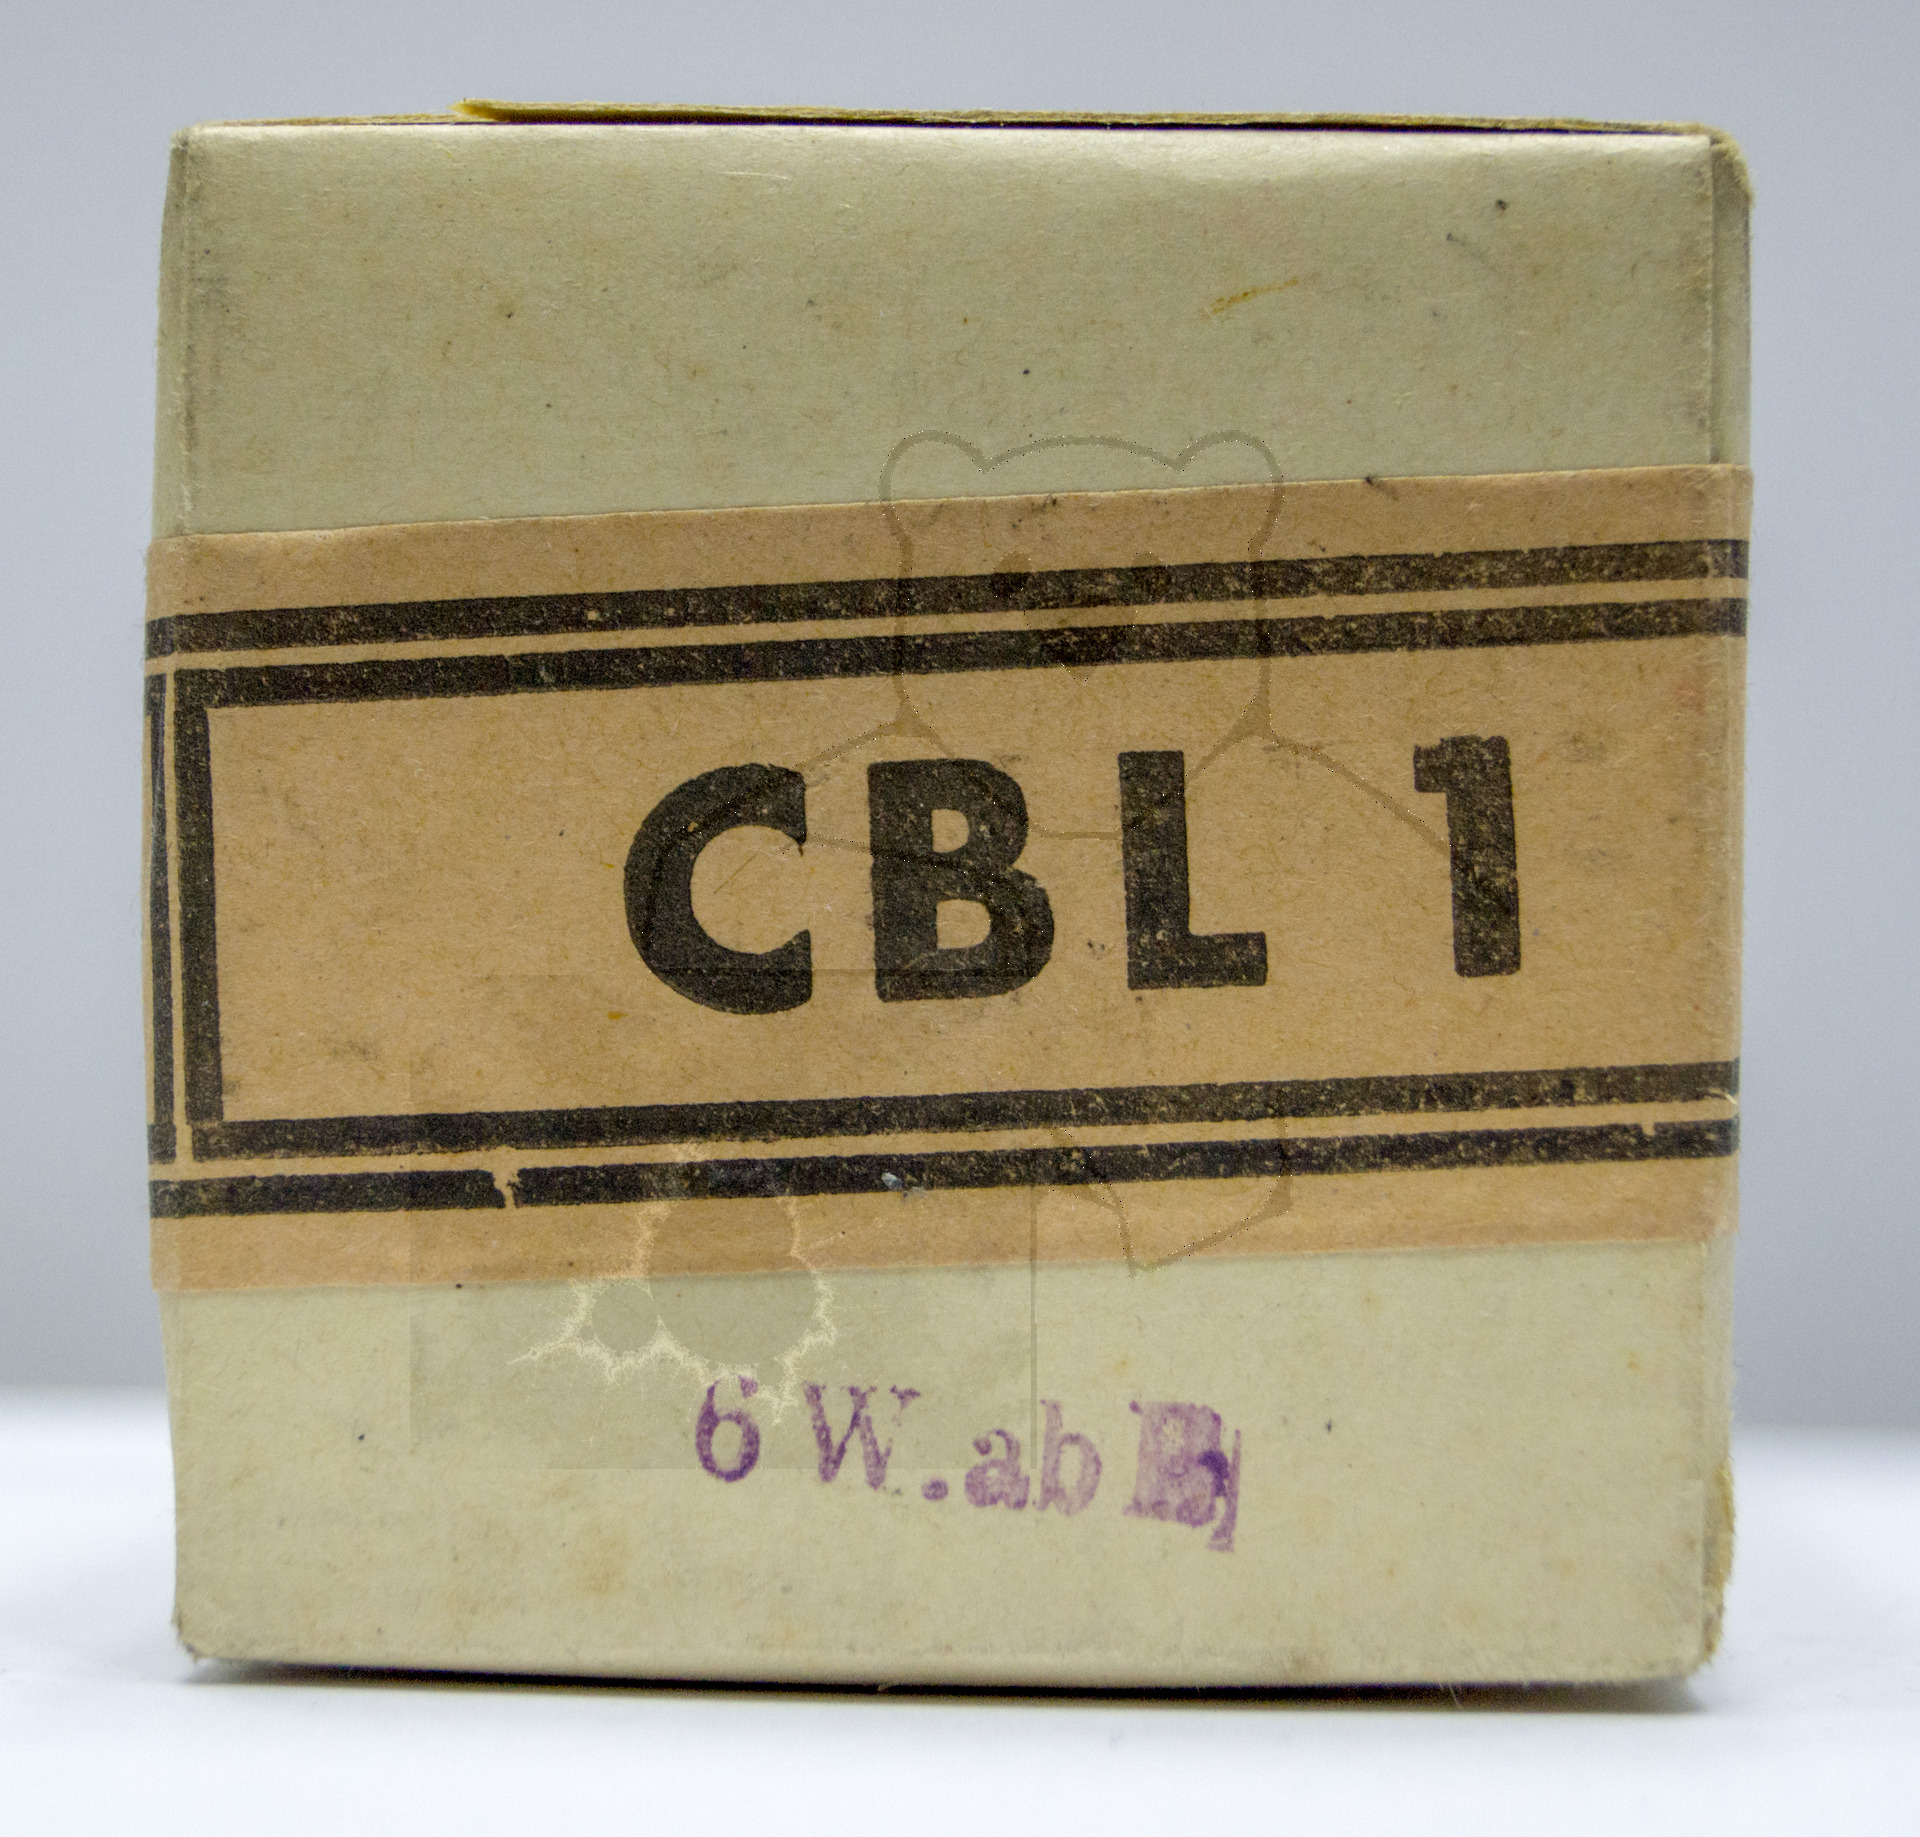 Röhre CBL1 #3773 Verpackung Bild 1